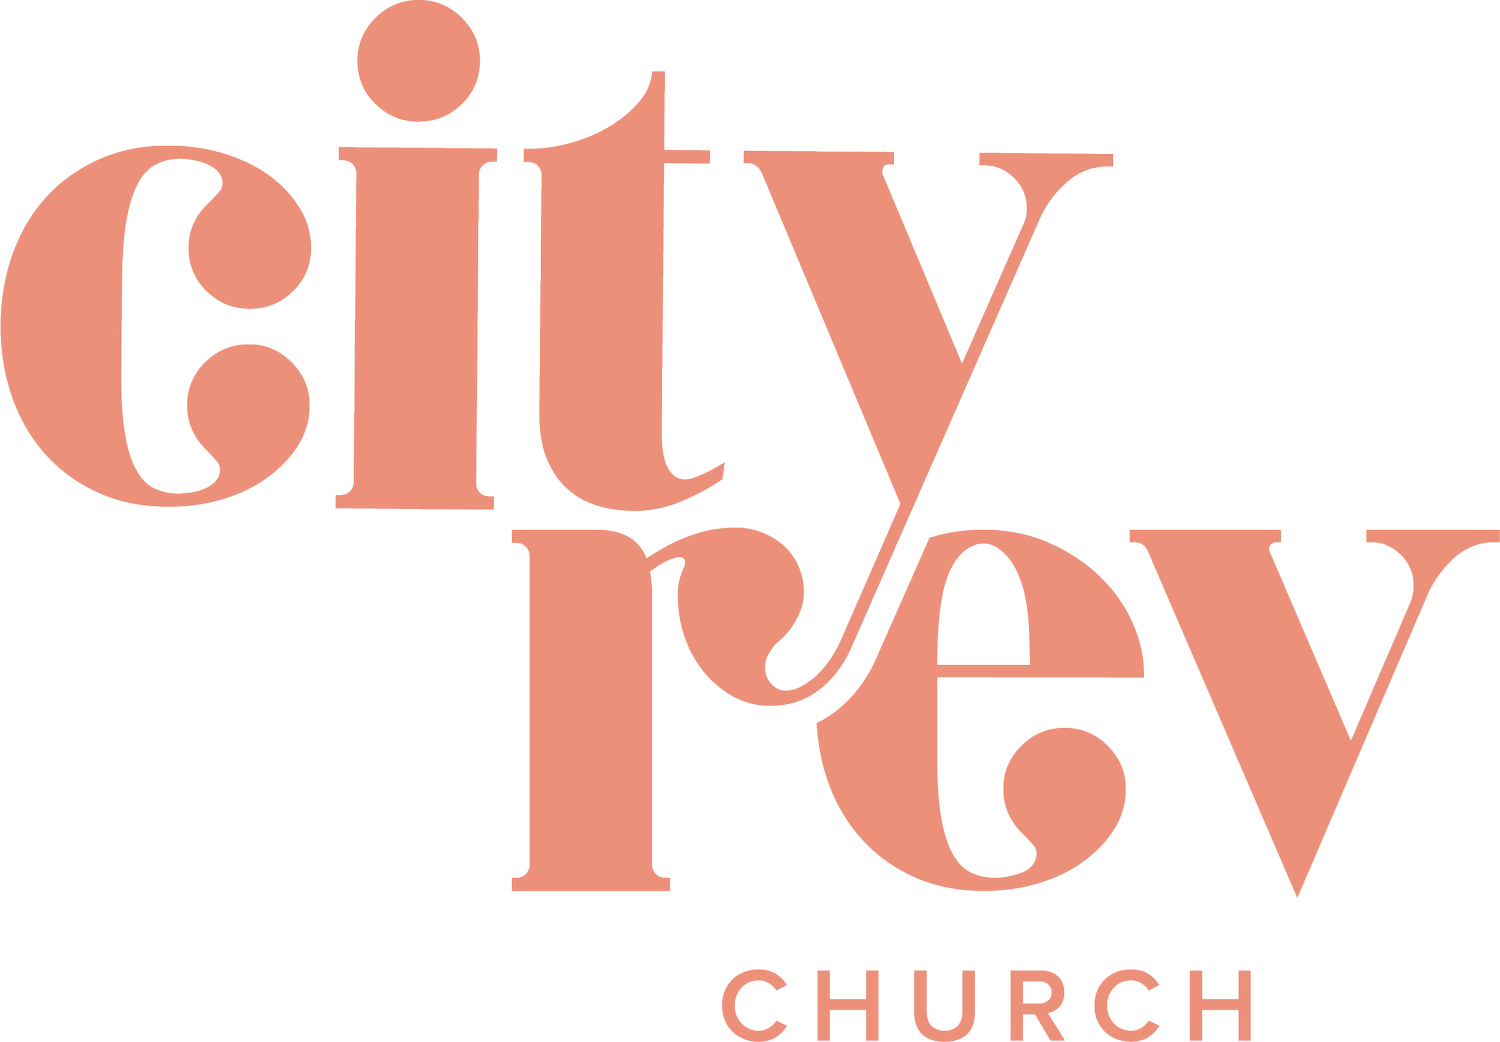 City Rev Church